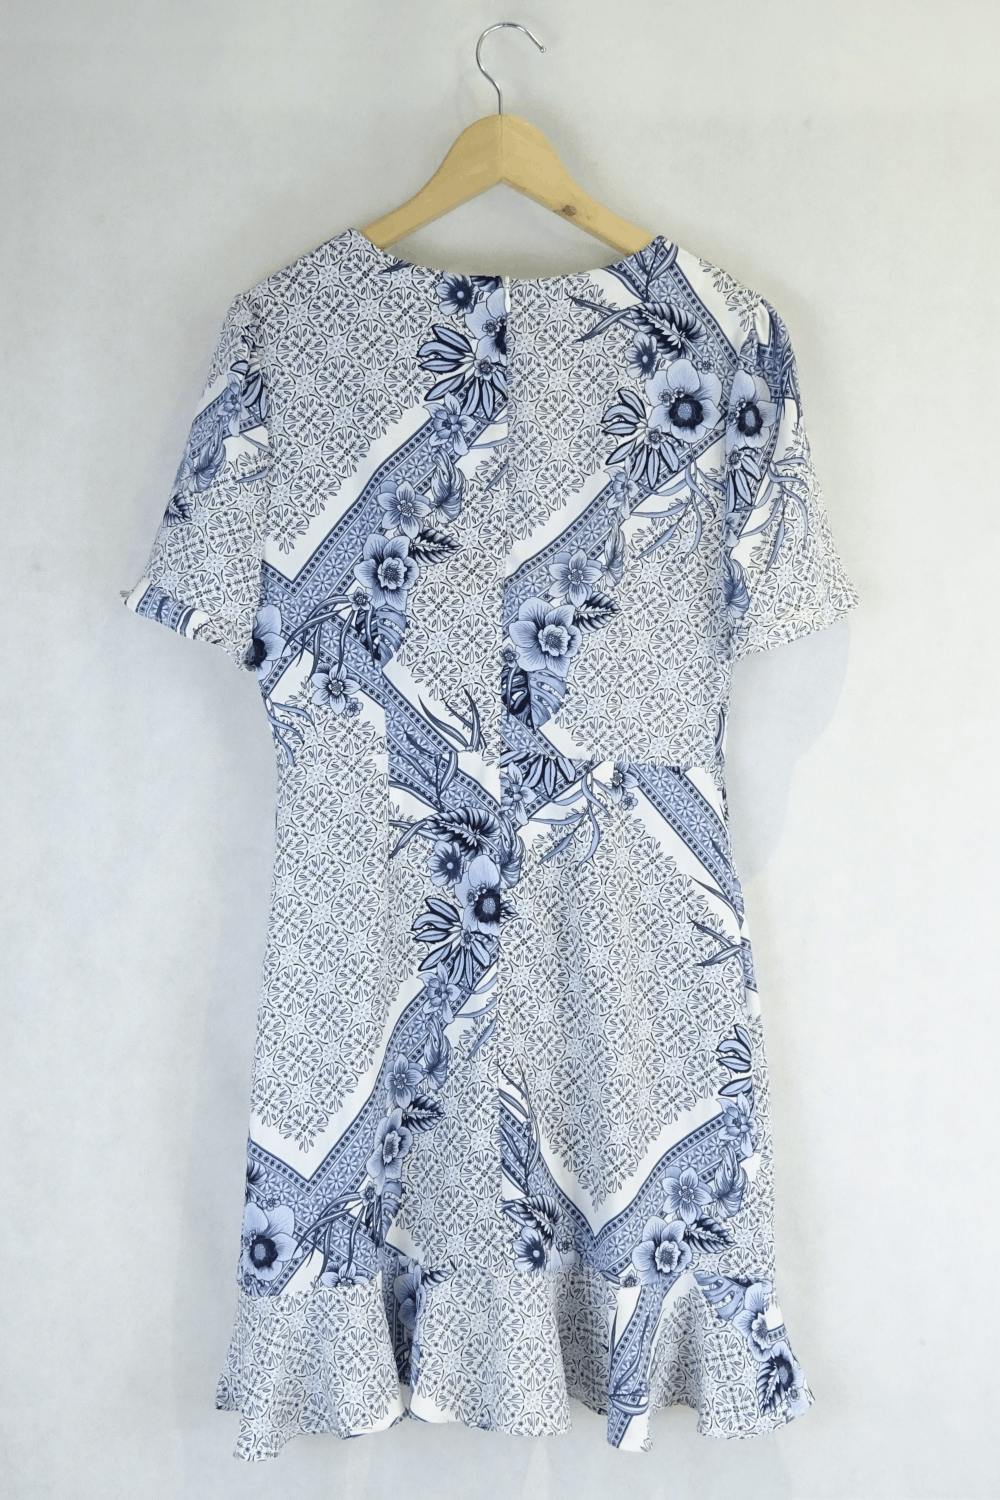 Tokito Blue And White Dress 10